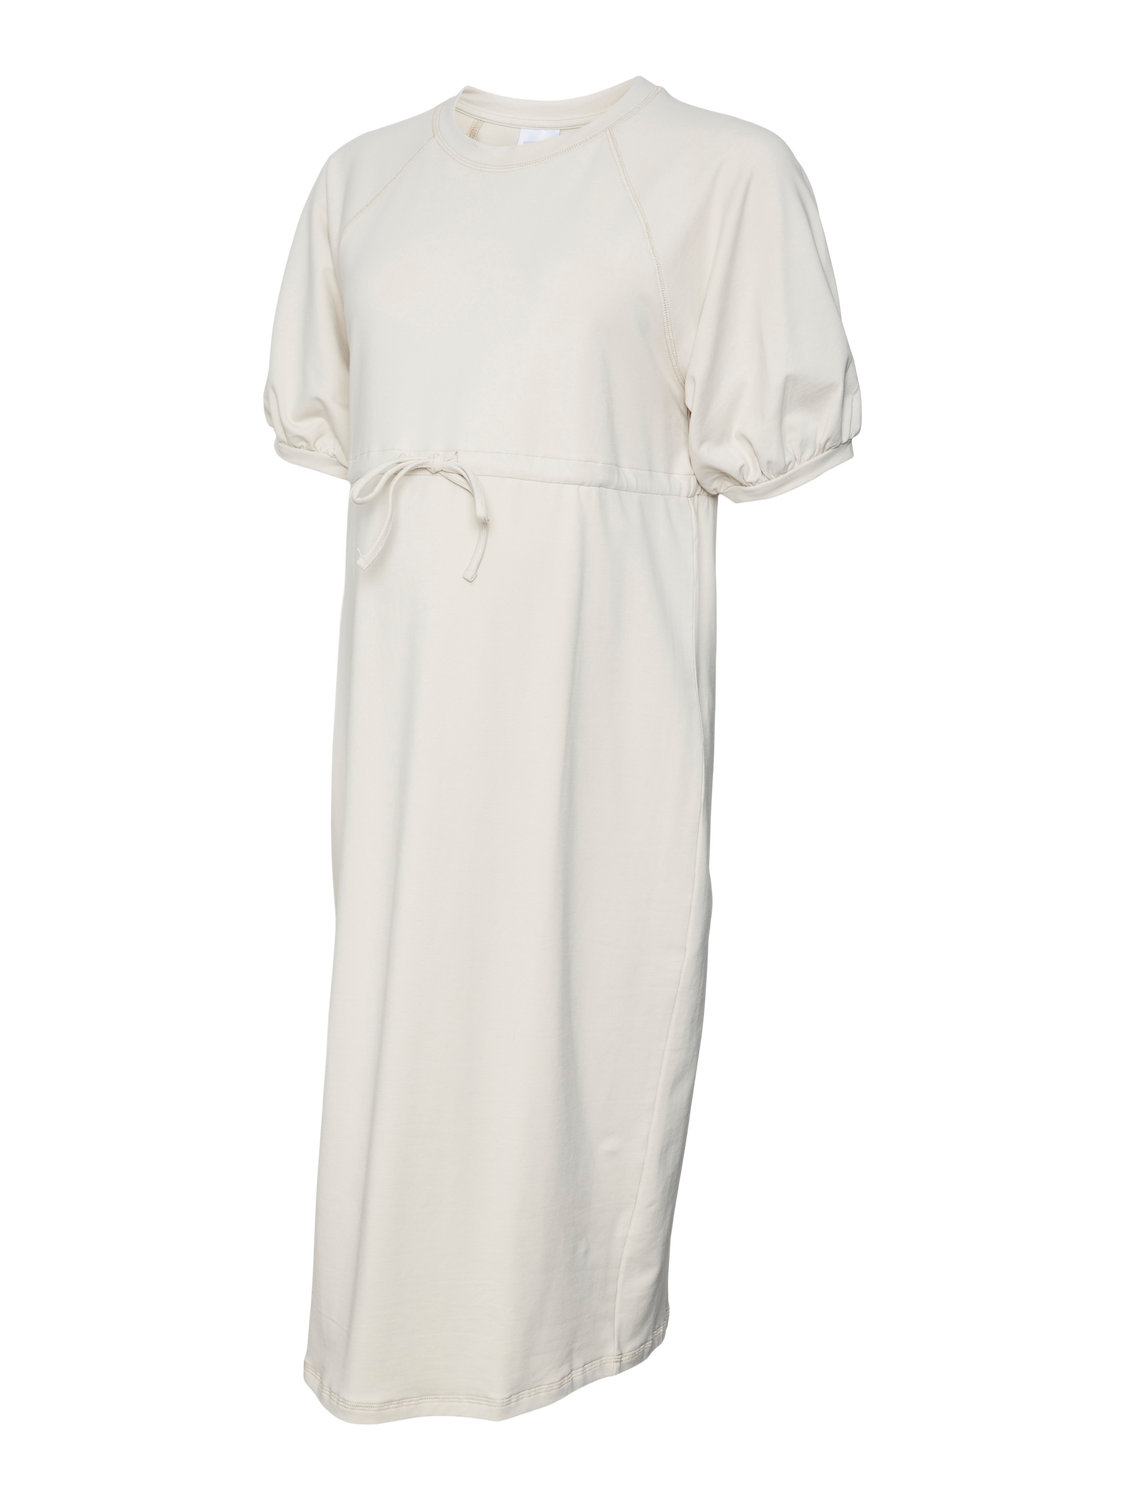 MAMA.LICIOUS Vente-kjole -French Oak - 20020174